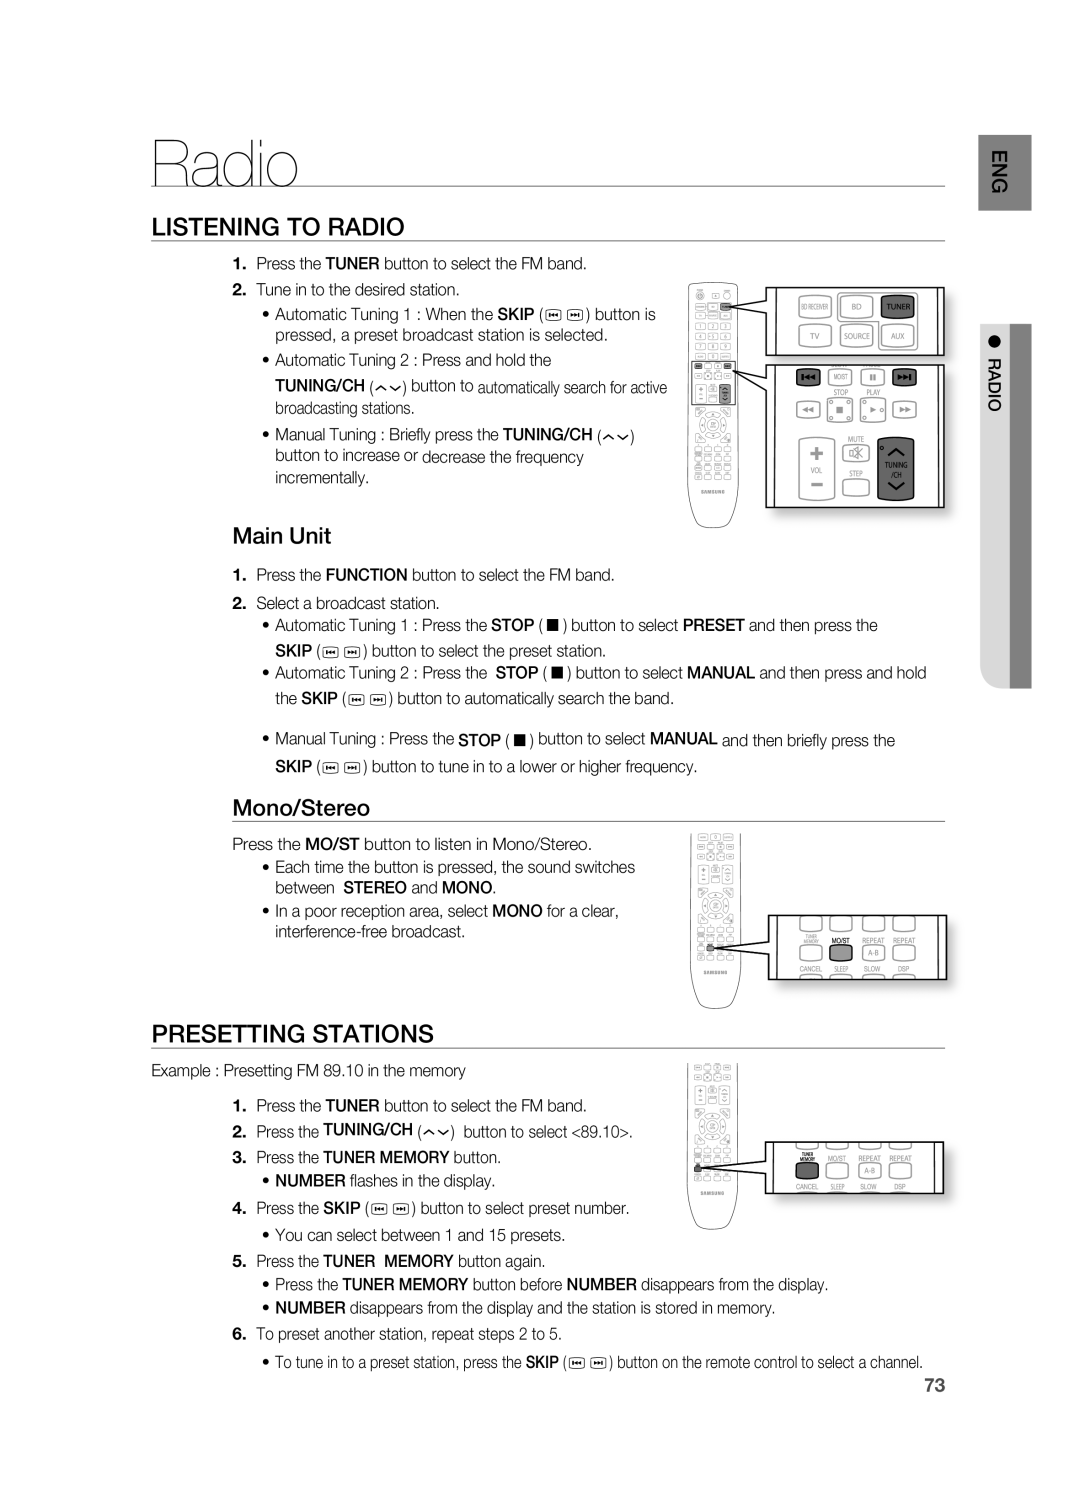 Samsung HT-BD8200 user manual Listening To Radio, Presetting Stations, Main Unit, Mono/Stereo 